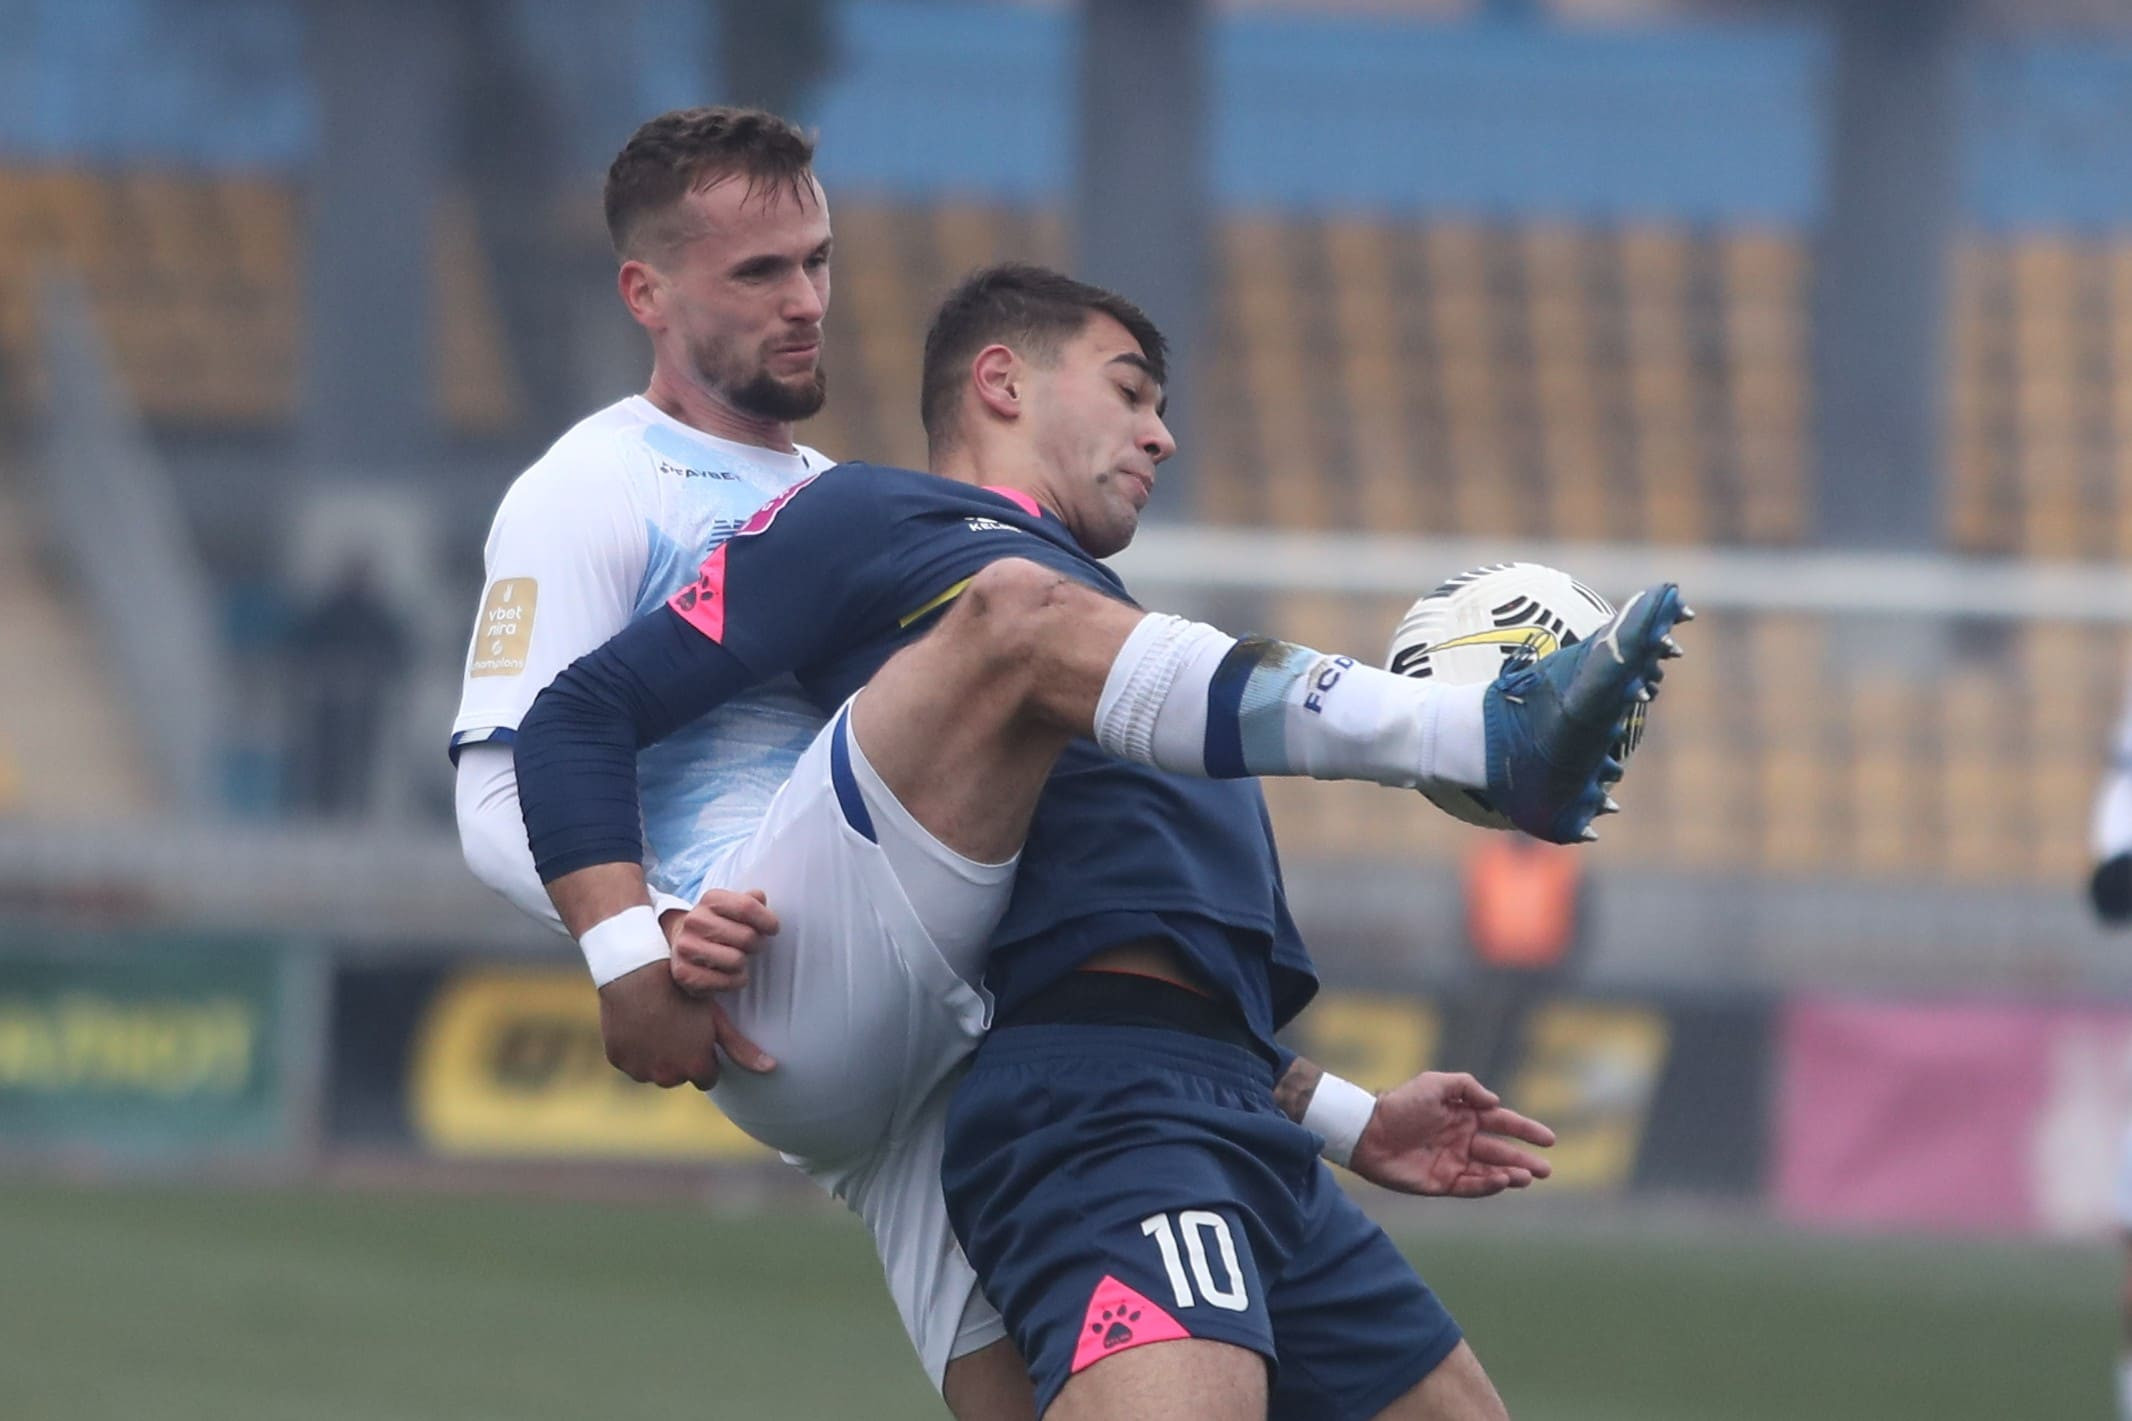 Tomasz Kedziora: “We played two different halves”